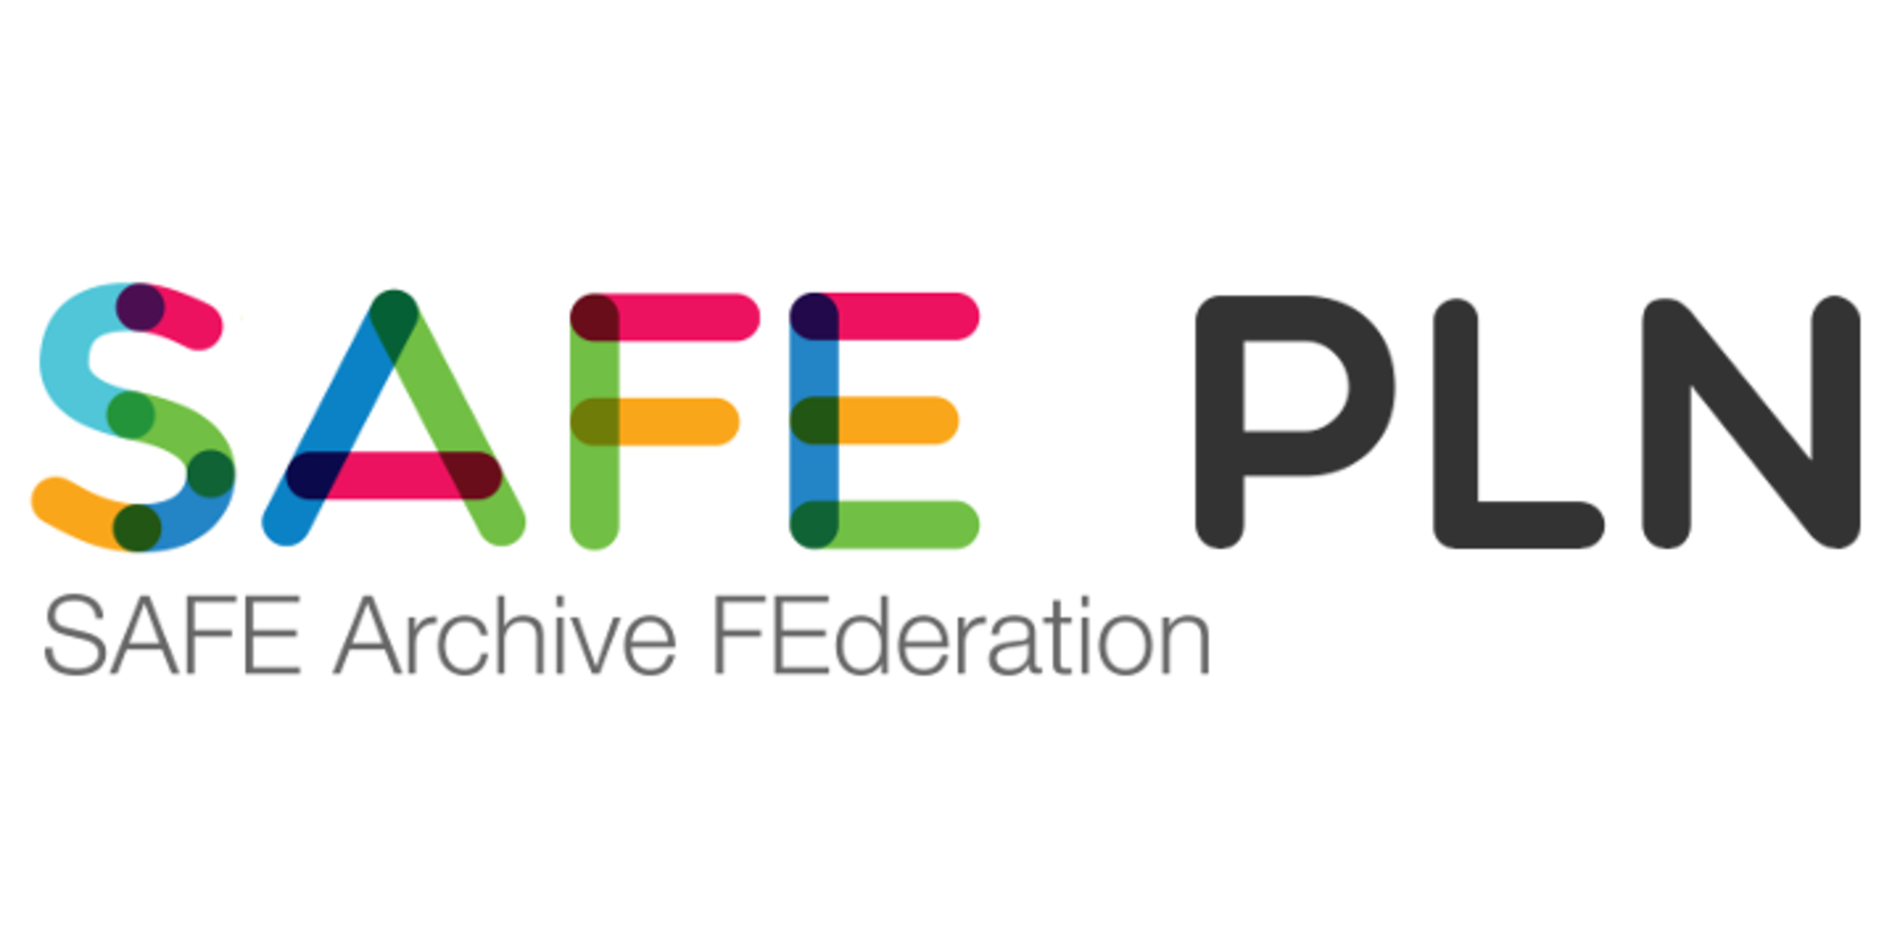 SAFE Archive FEderation logo